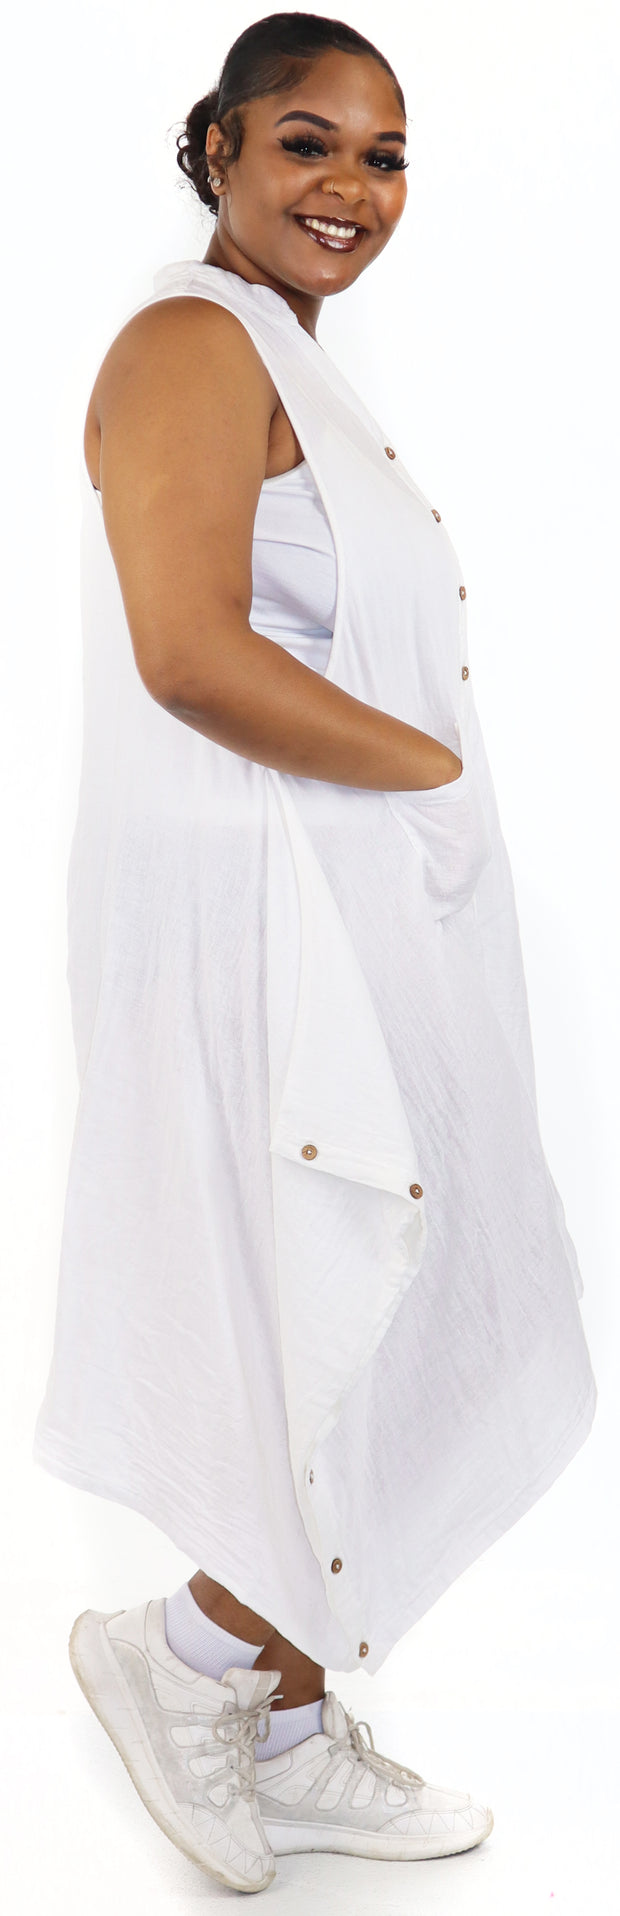 Women Boho Linen Sleeveless Button Down Midi Dress Top, Romper w/ Front Pockets, Reg and Plus Sizes